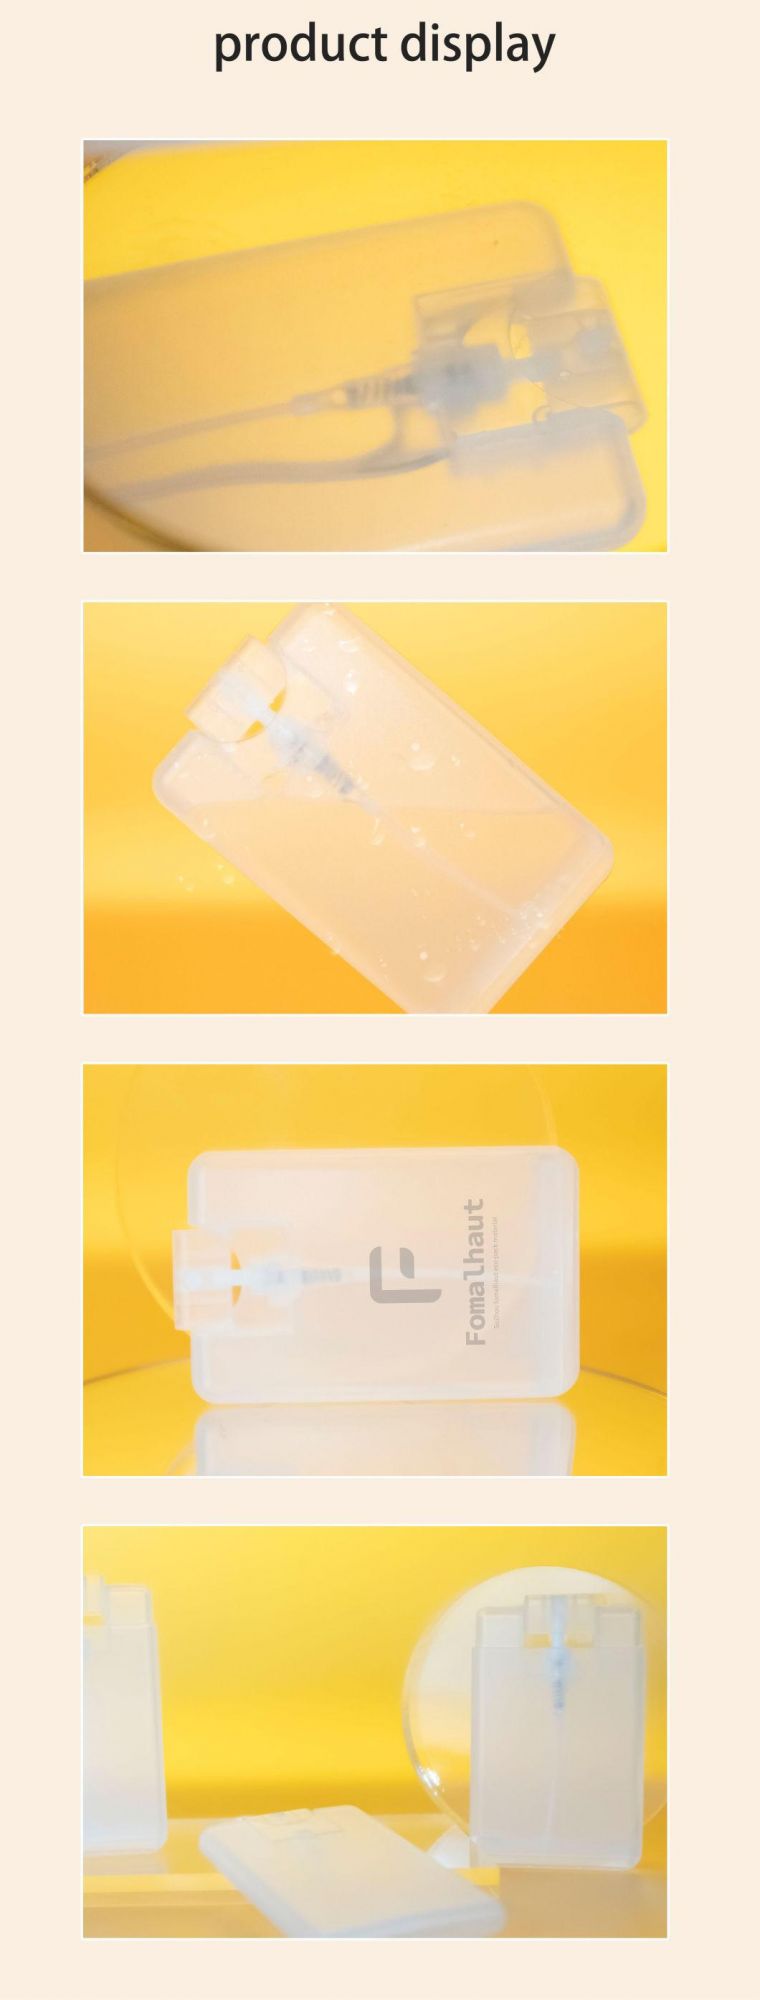 Fomalhaut Free Sample 20ml Transparent Facial Mist Perfumes Sprayer Bottle